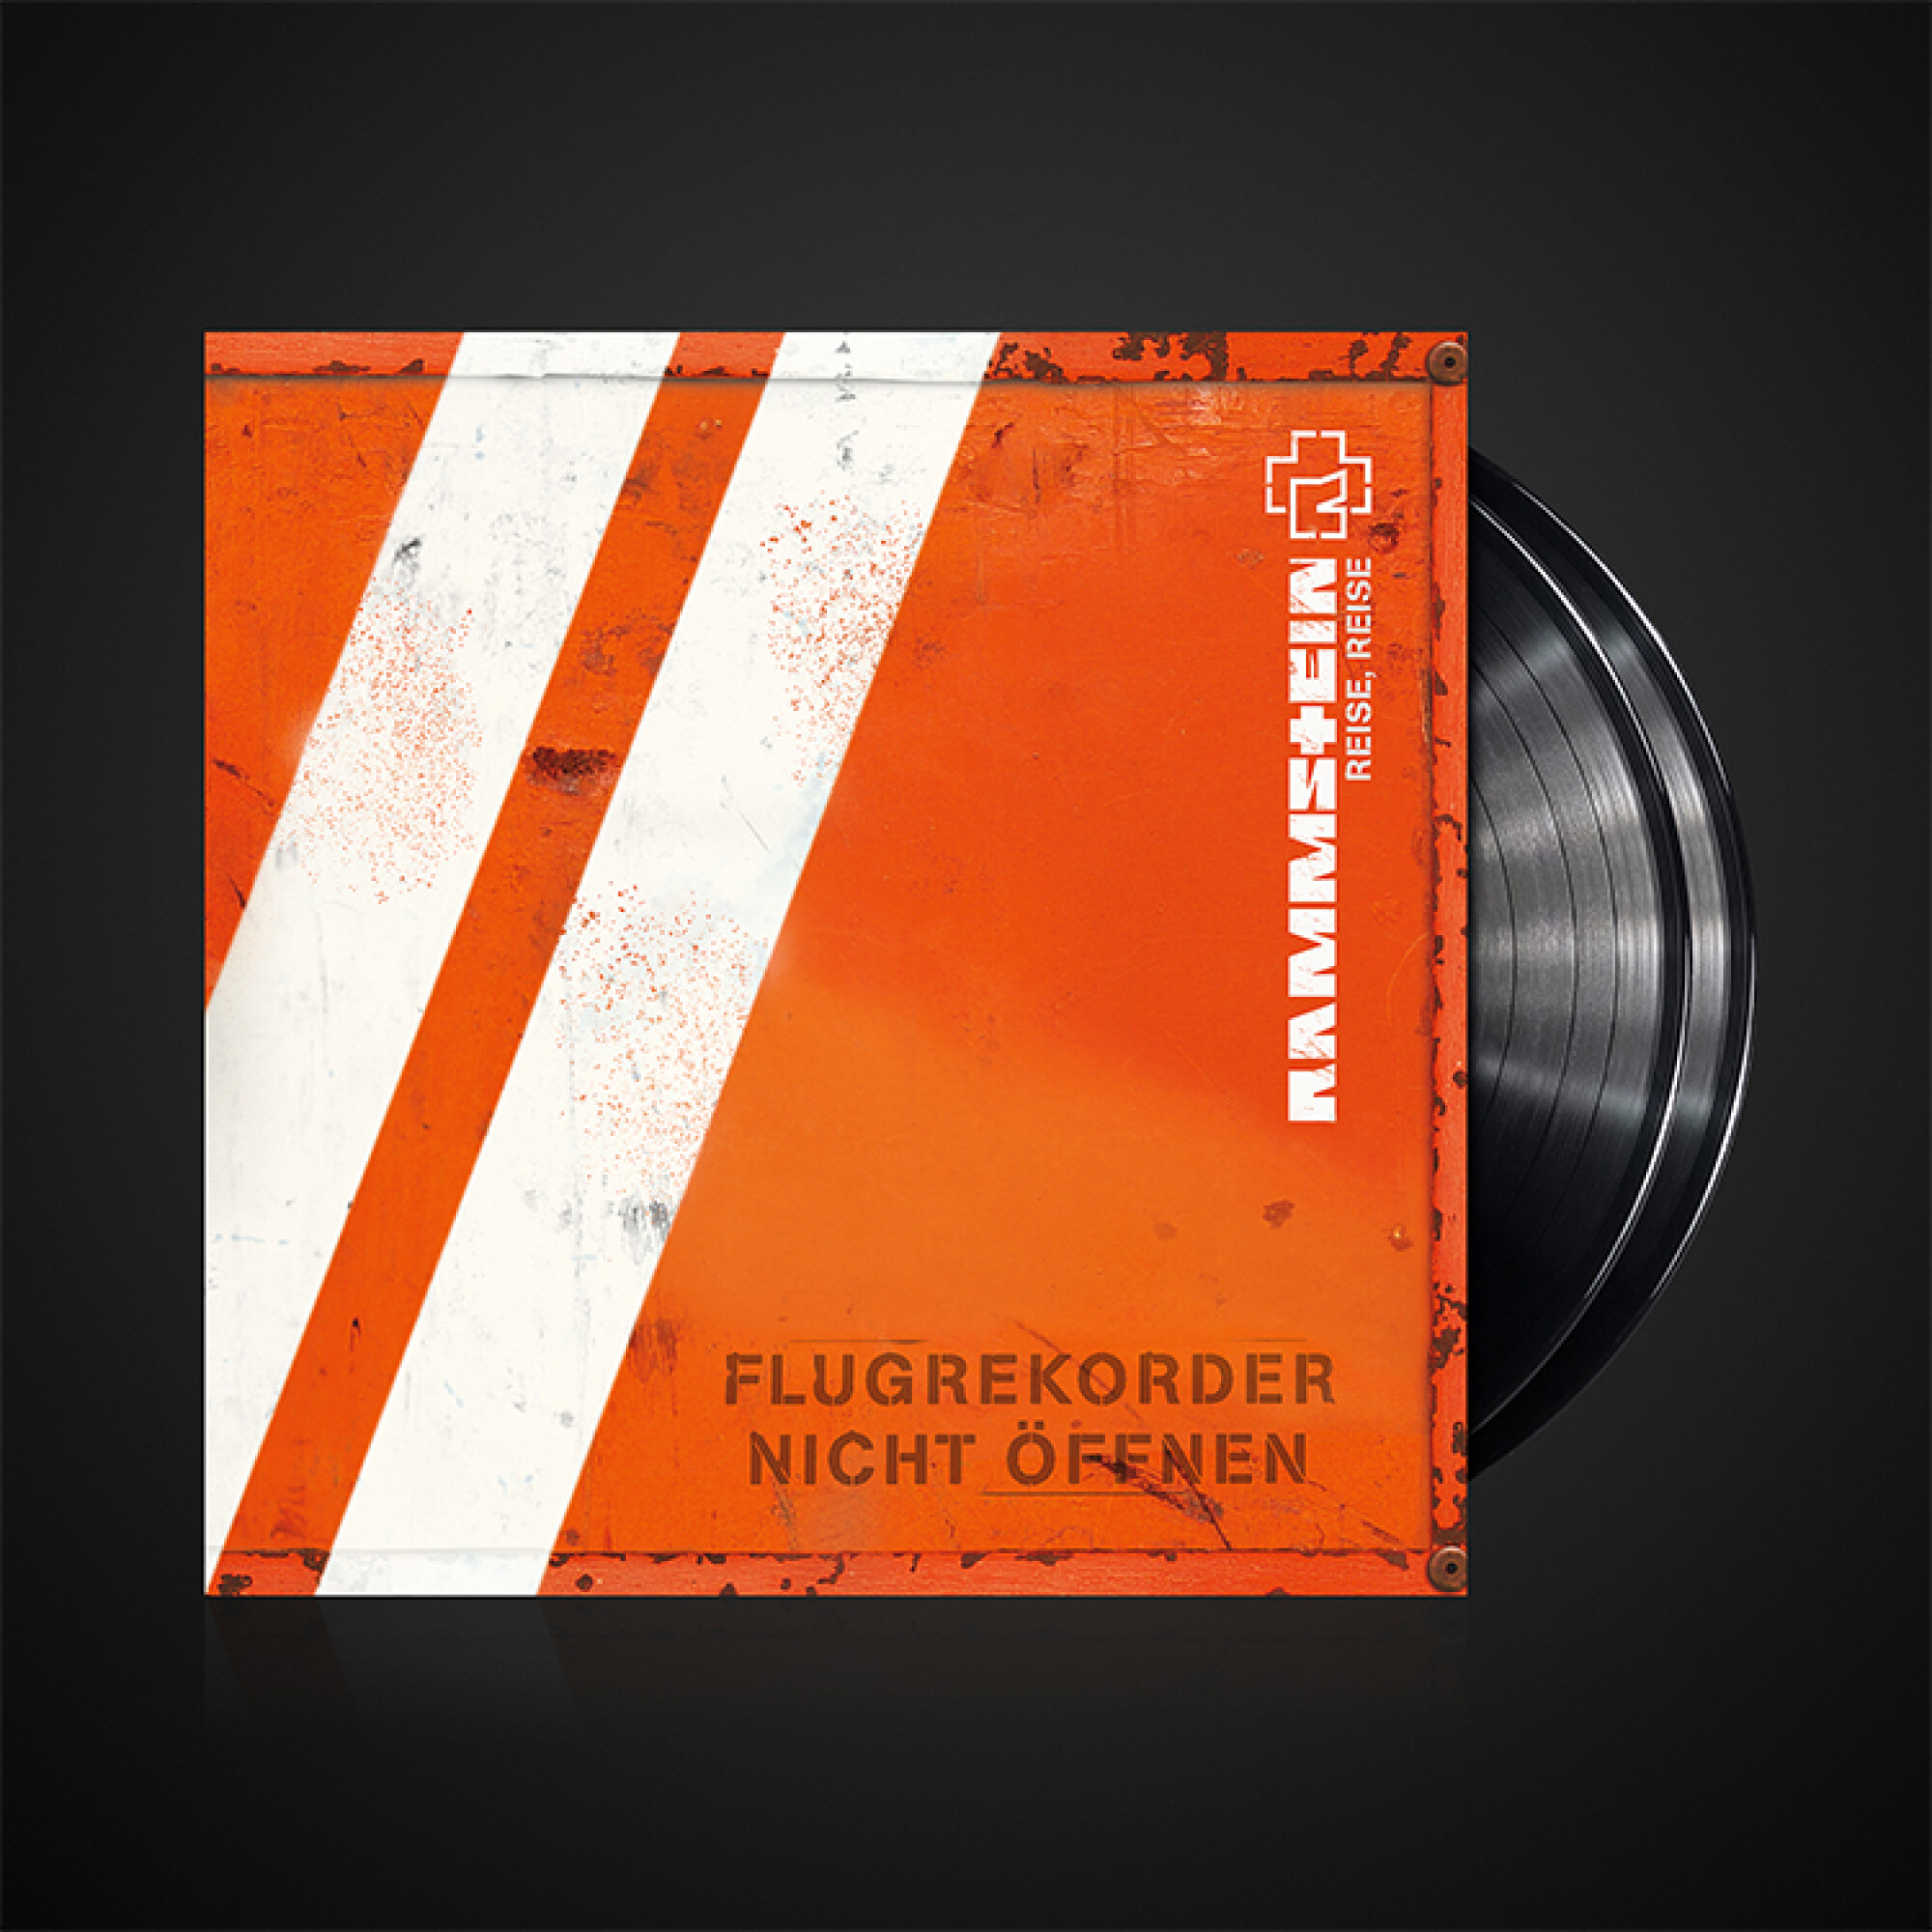 Rammstein Album ”Reise Reise”, Vinyl